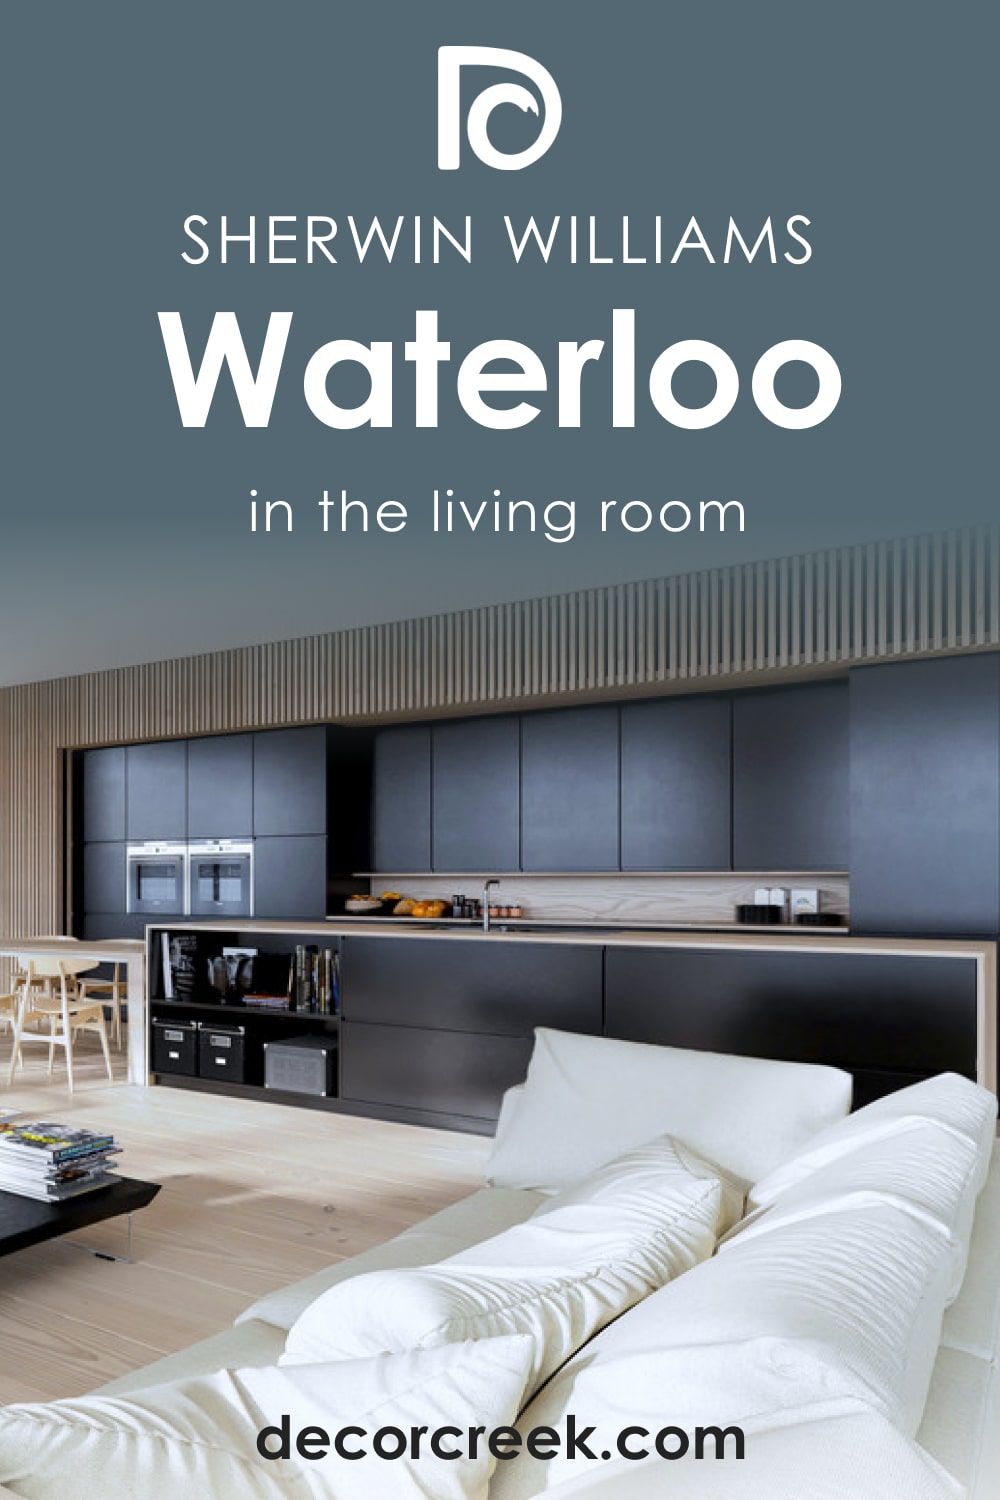 Waterloo SW-9141  in a Living Room